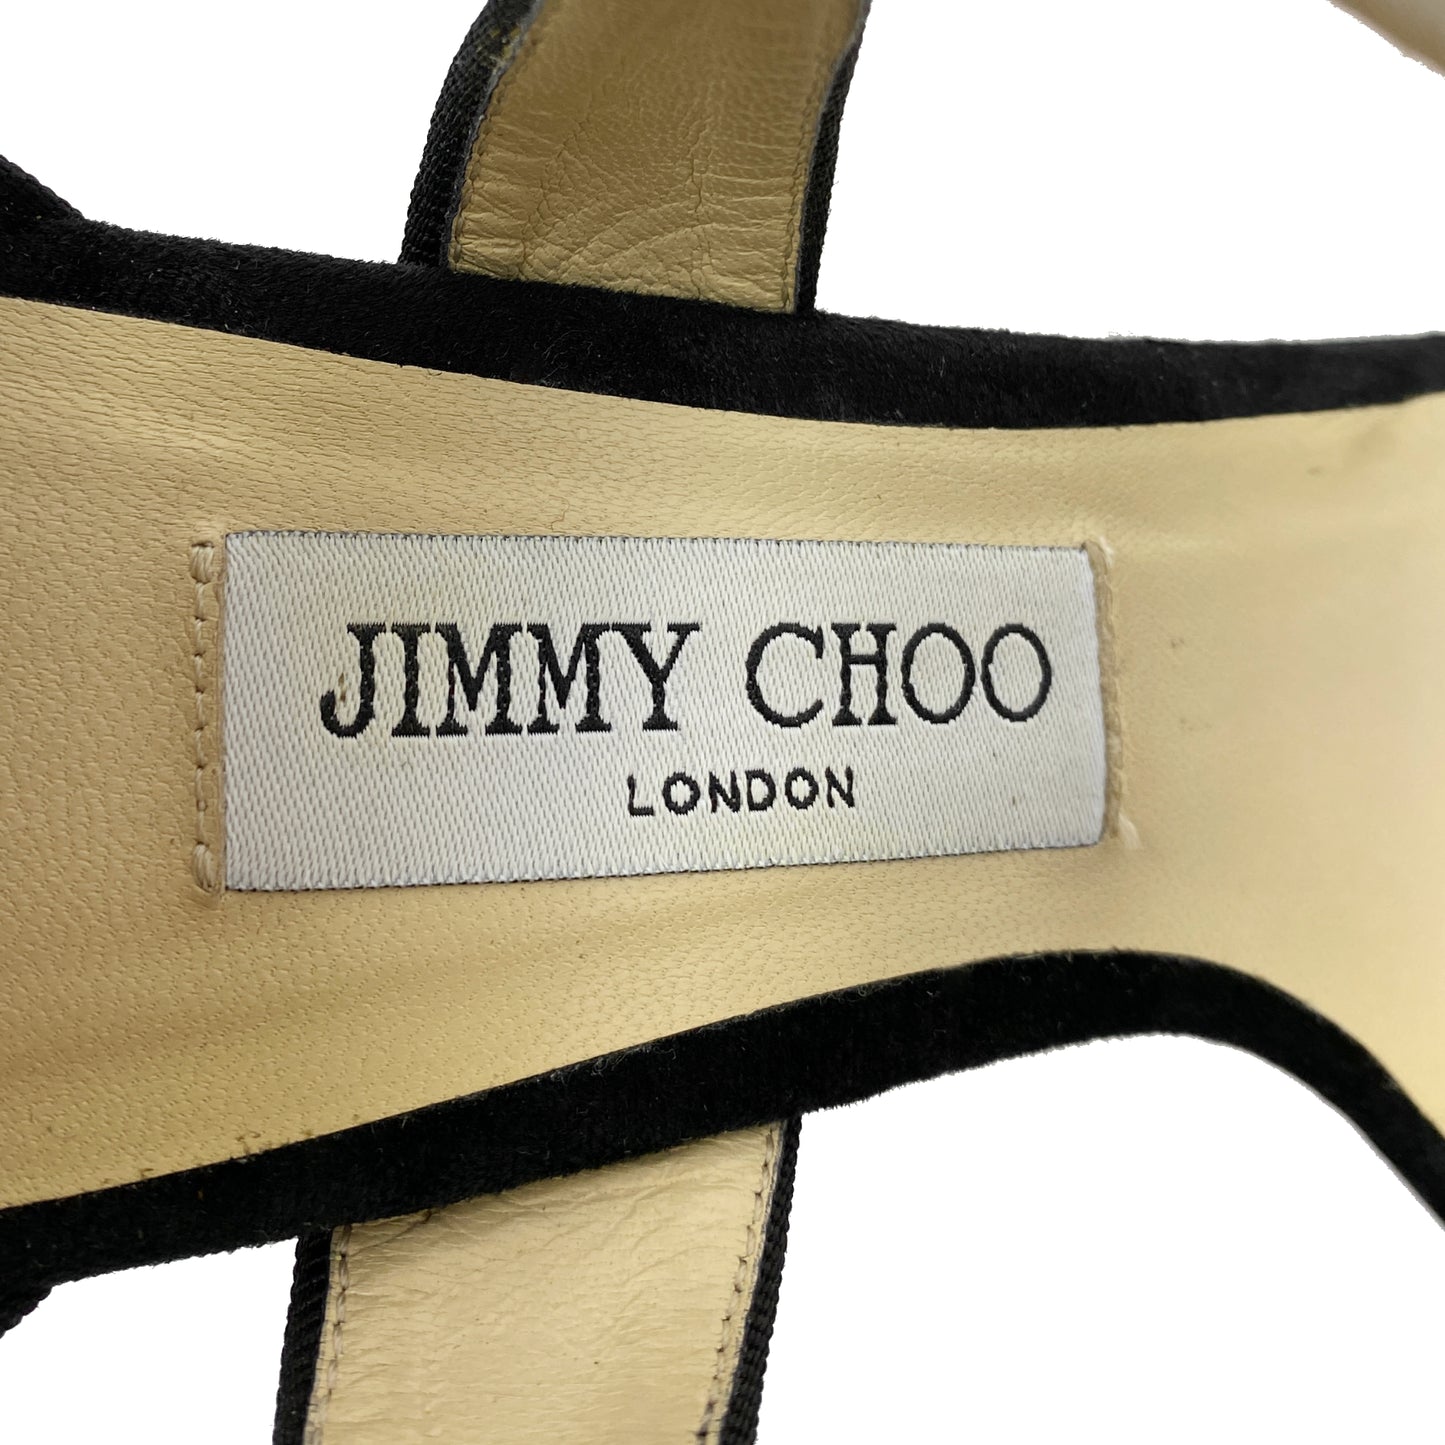 Jimmy Choo Molly 85 Velvet Ankle Harness Sandals Size EU 40